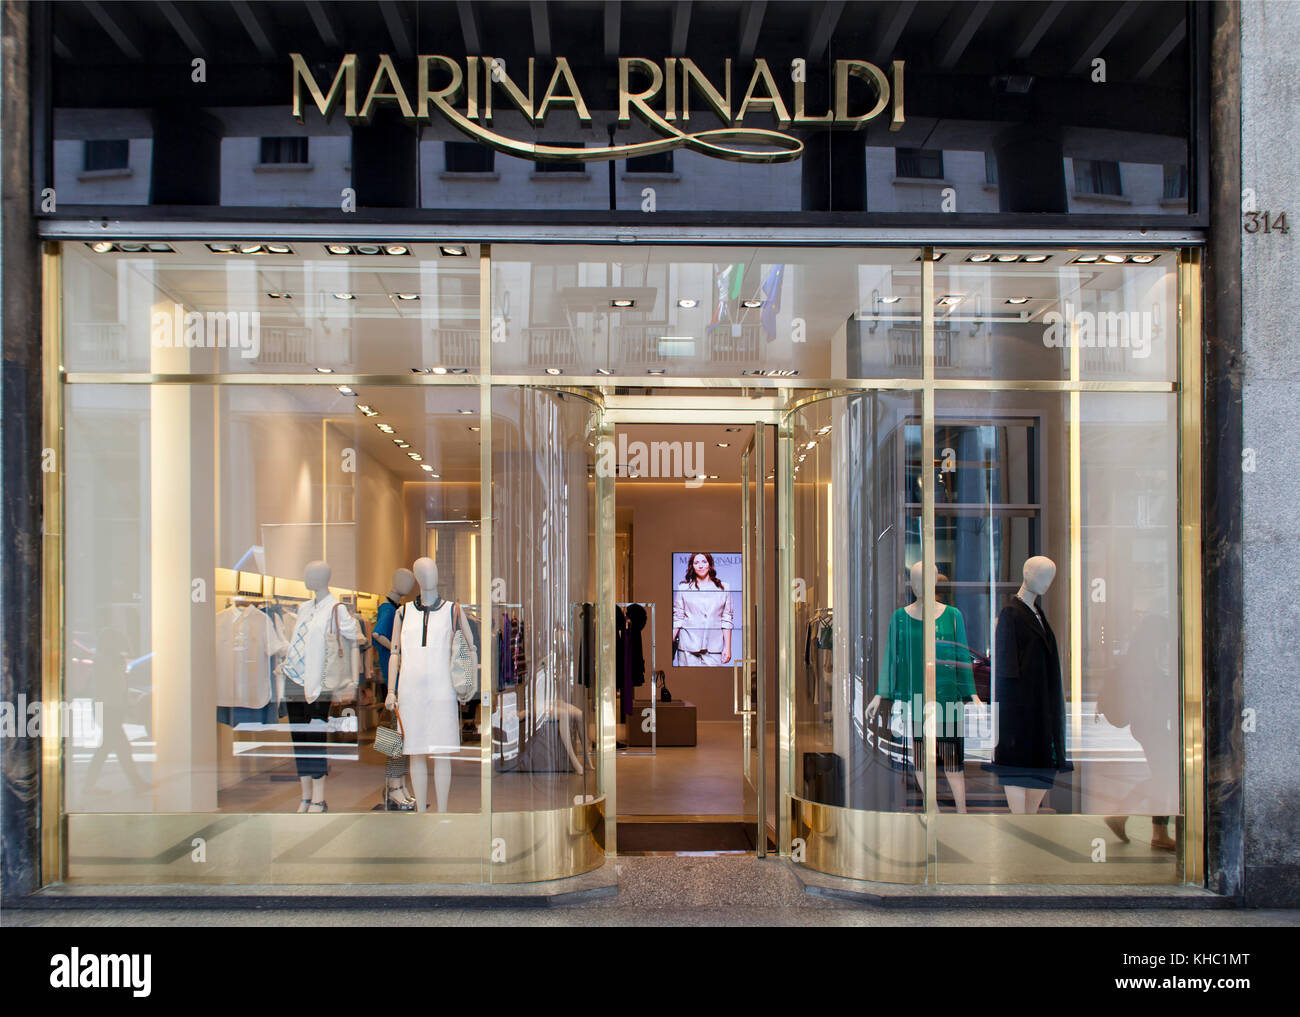 TURIN, ITALY - 3, 2015: Marina Rinaldi store in Turin, Italy. Marina Rinaldi is plus-size clothing brand of Italian Max Mara Fashion G Stock - Alamy